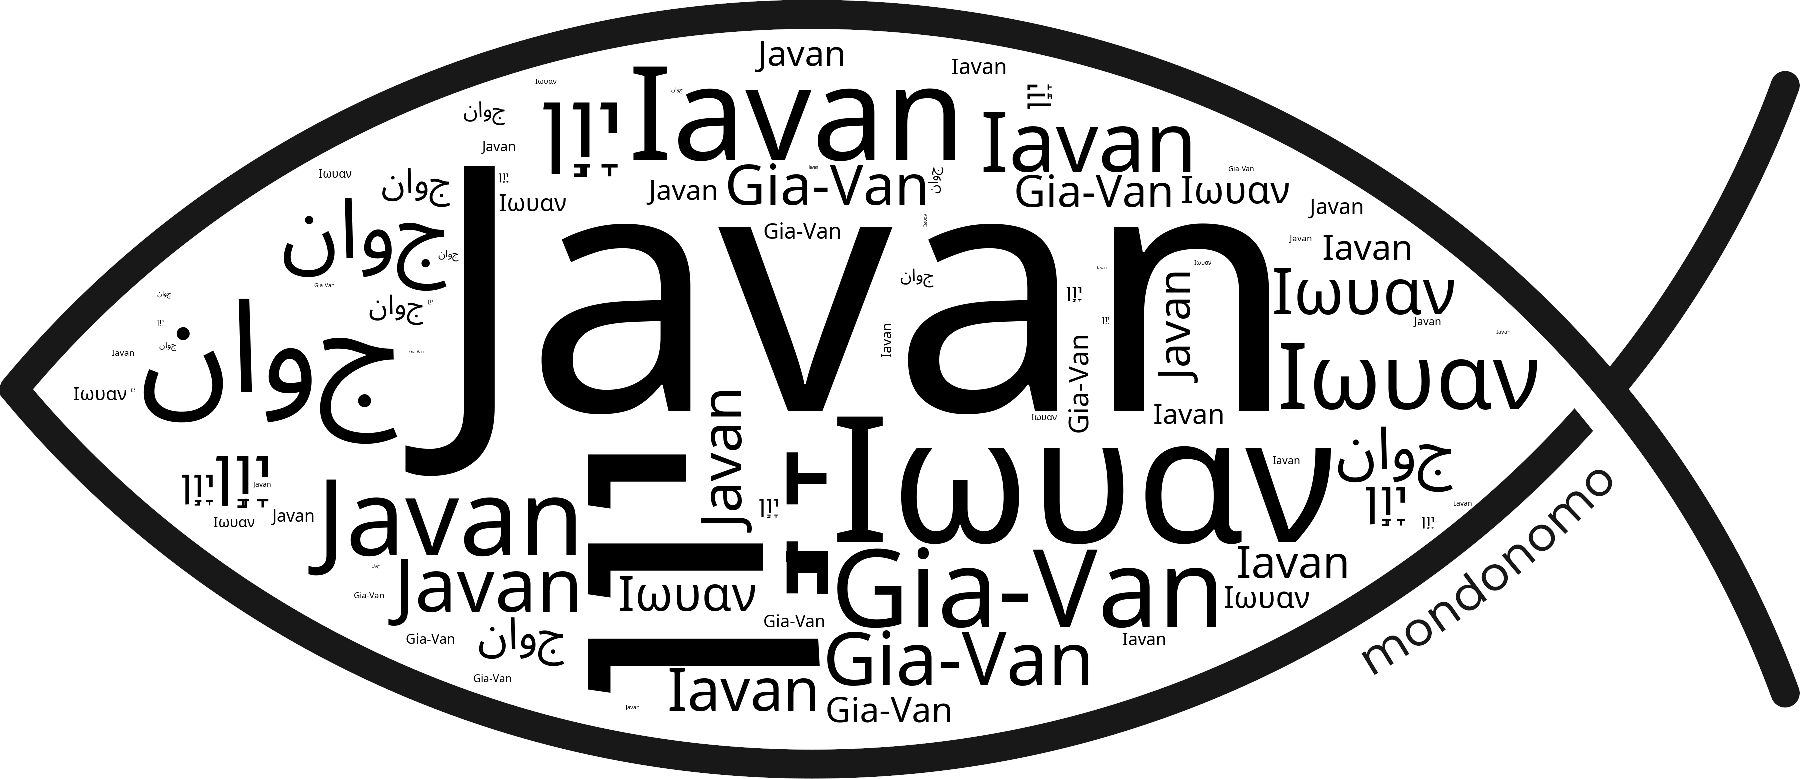 Name Javan in the world's Bibles